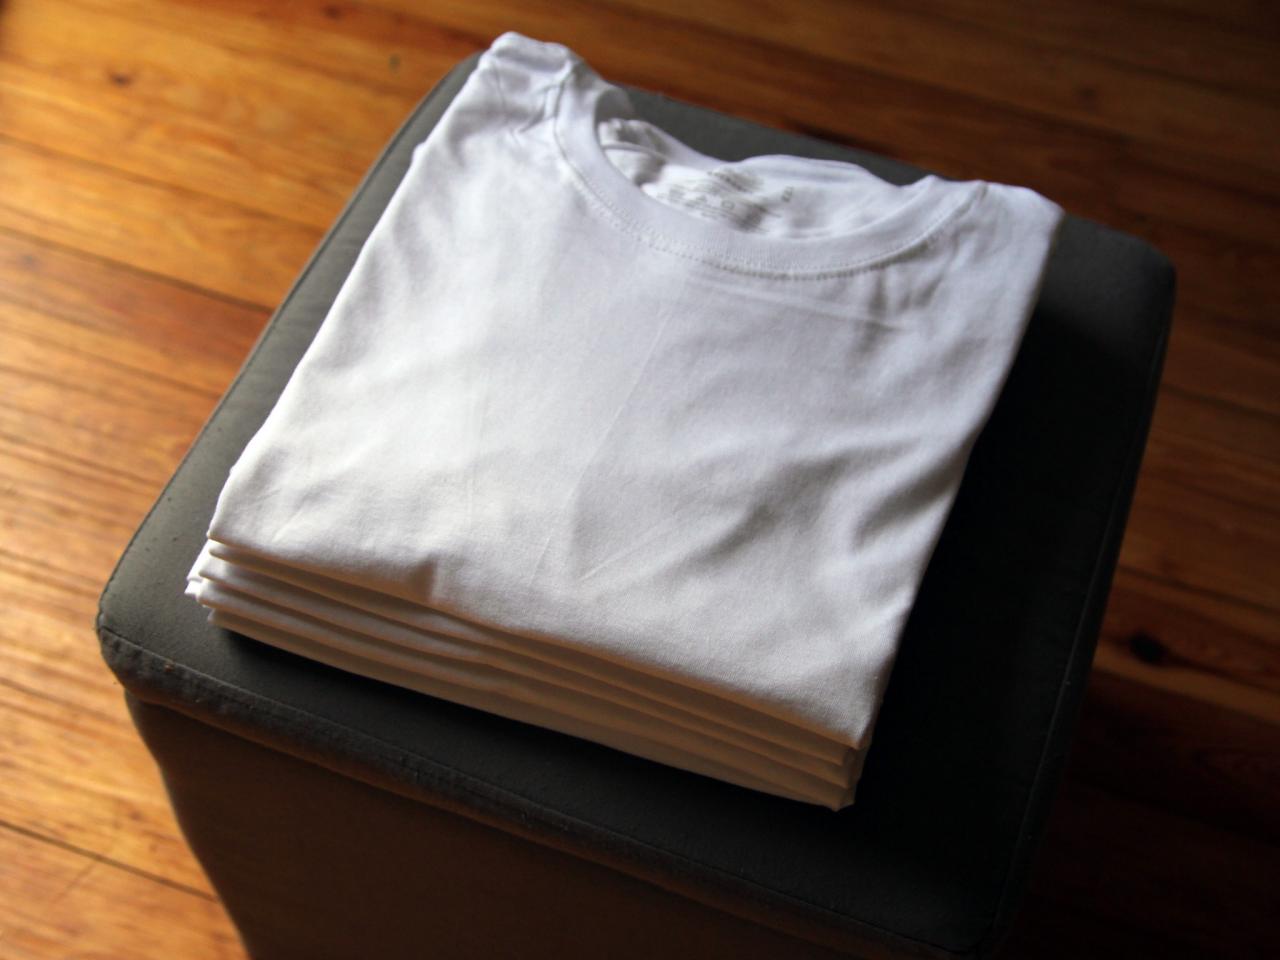 T-Shirt Folding HACKS Fold Shirt In Under 3 Seconds? 4 Ways To Fold Tee's - YouTube